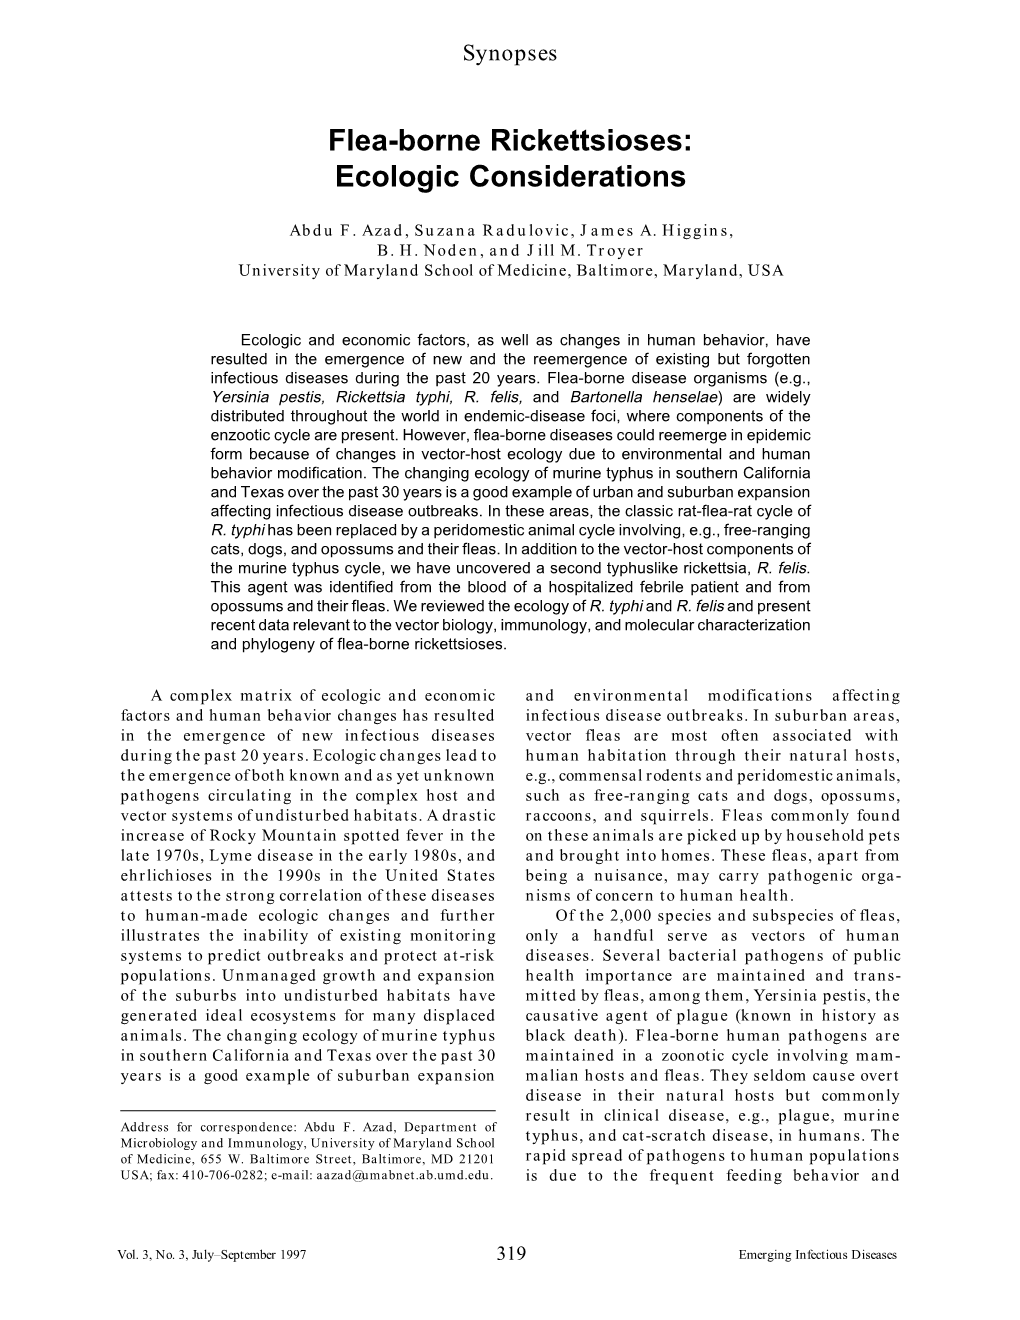 Flea-Borne Rickettsioses: Ecologic Considerations